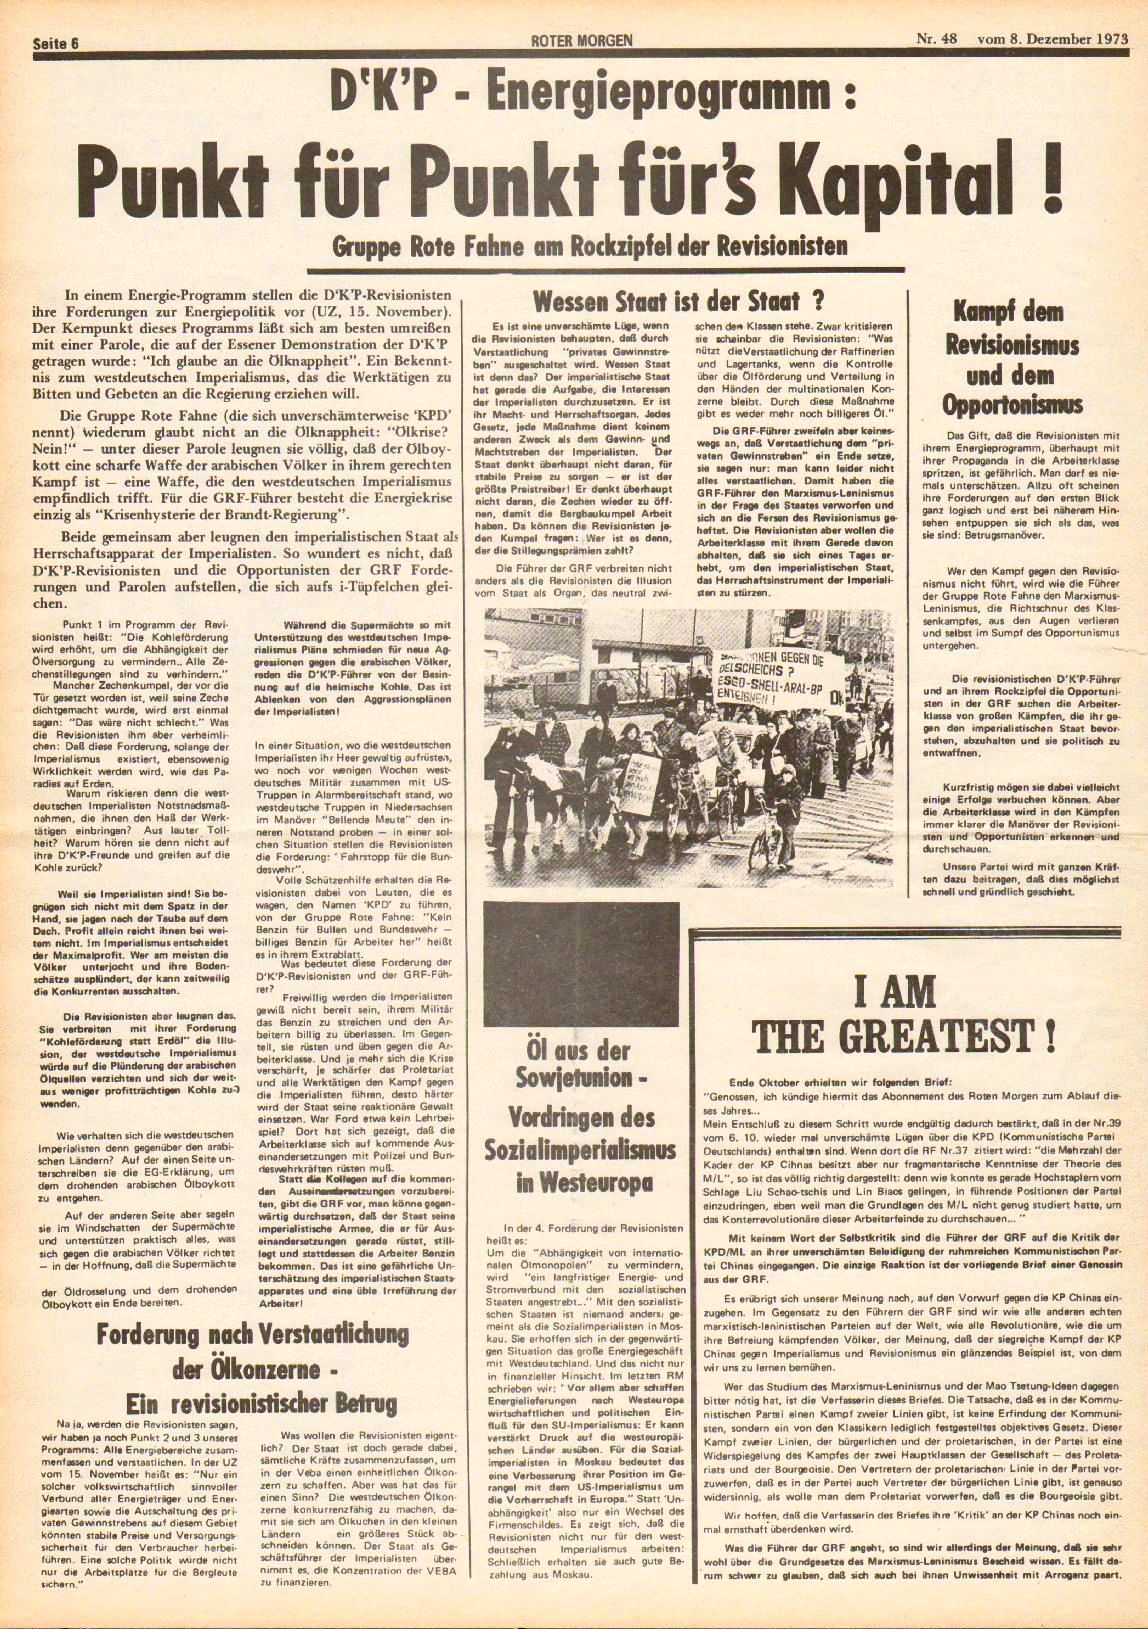 Roter Morgen, 7. Jg., 8. Dezember 1973, Nr. 48, Seite 6